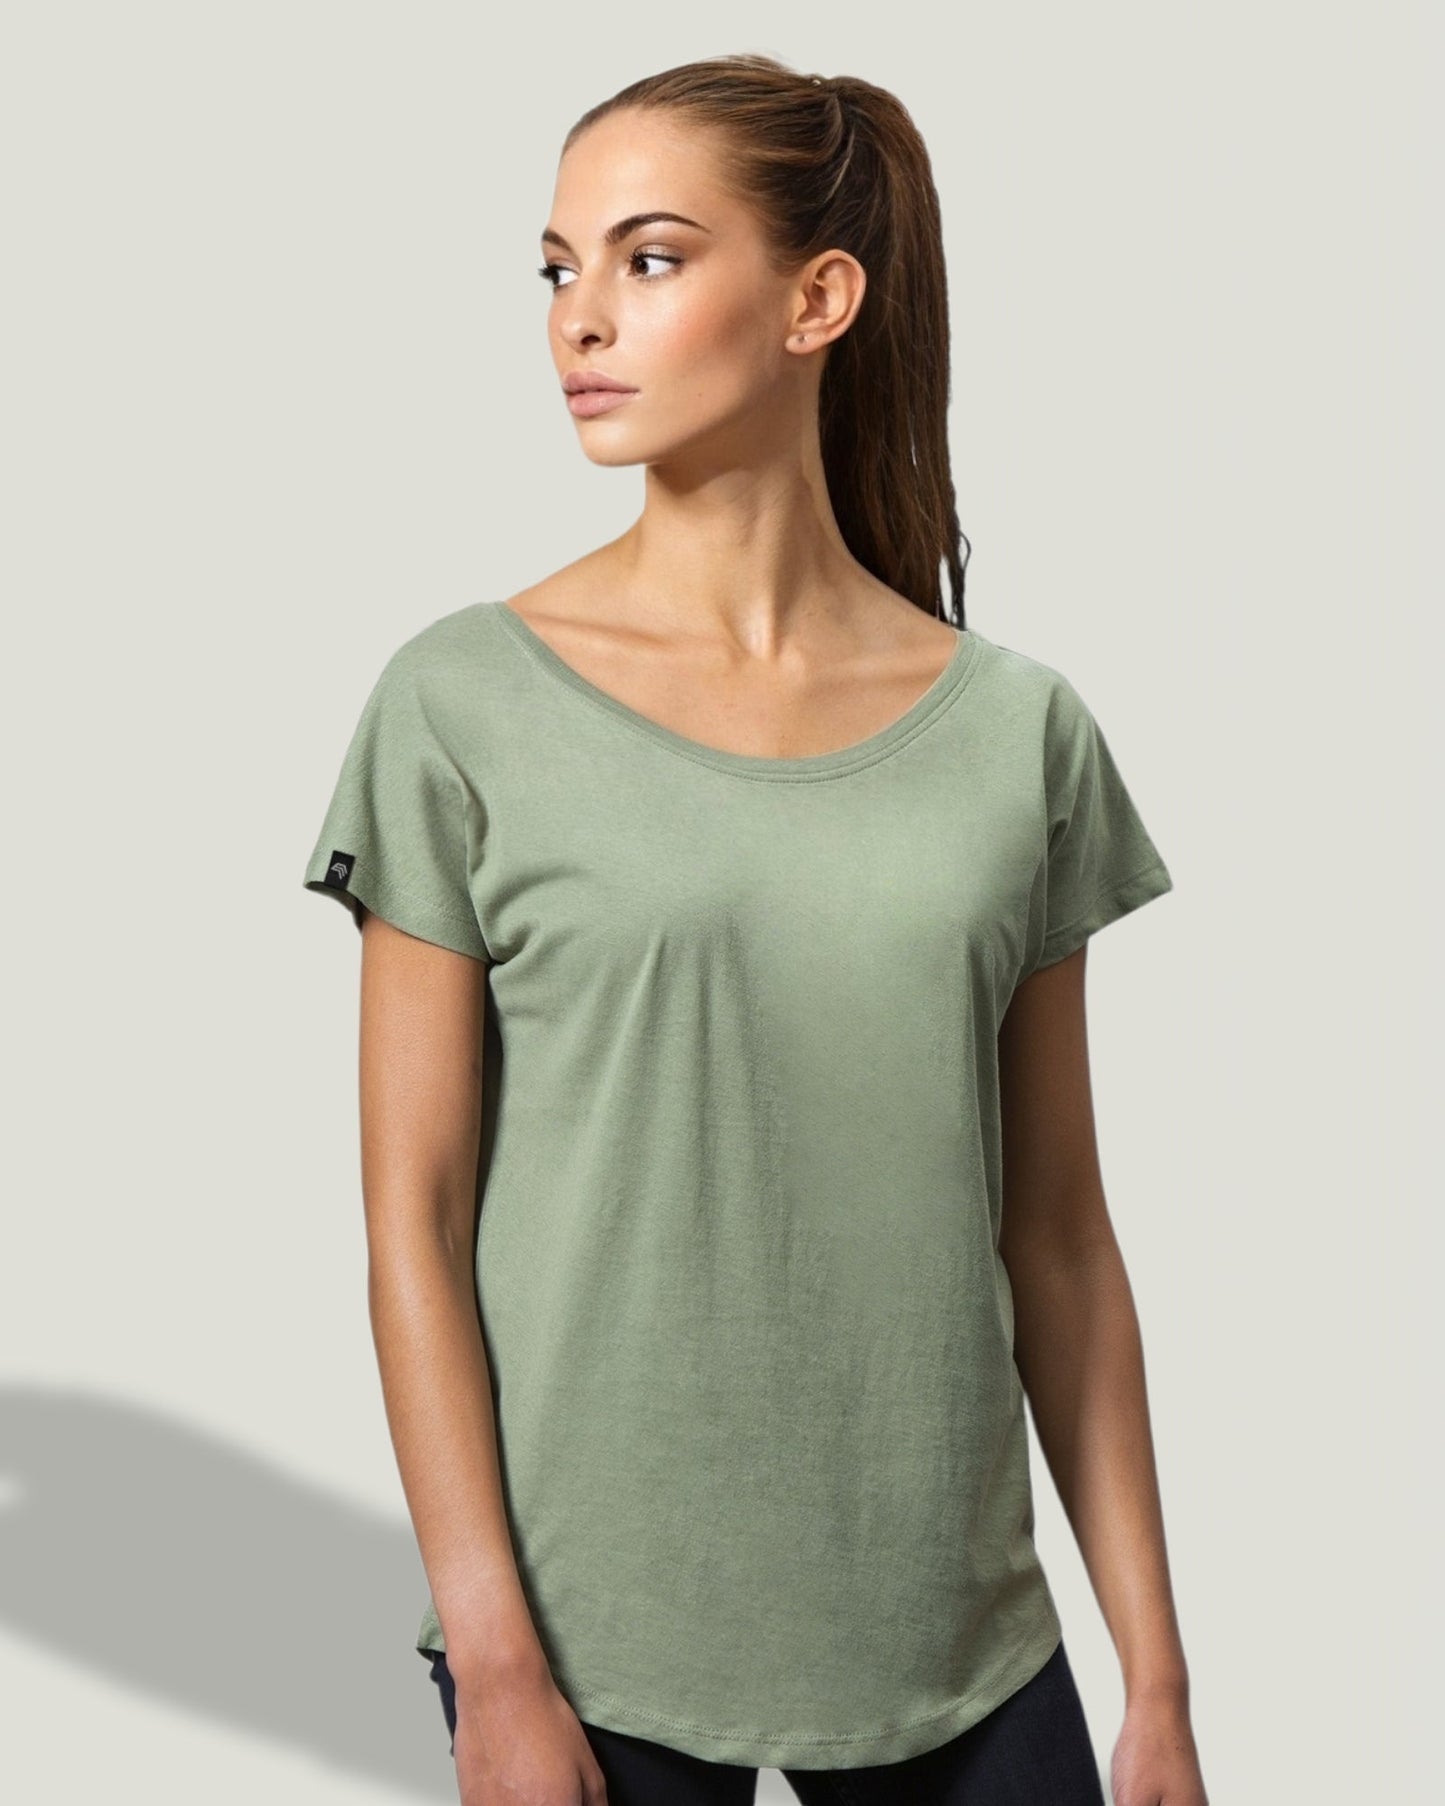 MTS M091 ― Damen Loose Fit T-Shirt Bio-Baumwolle - Heather Grau Melange